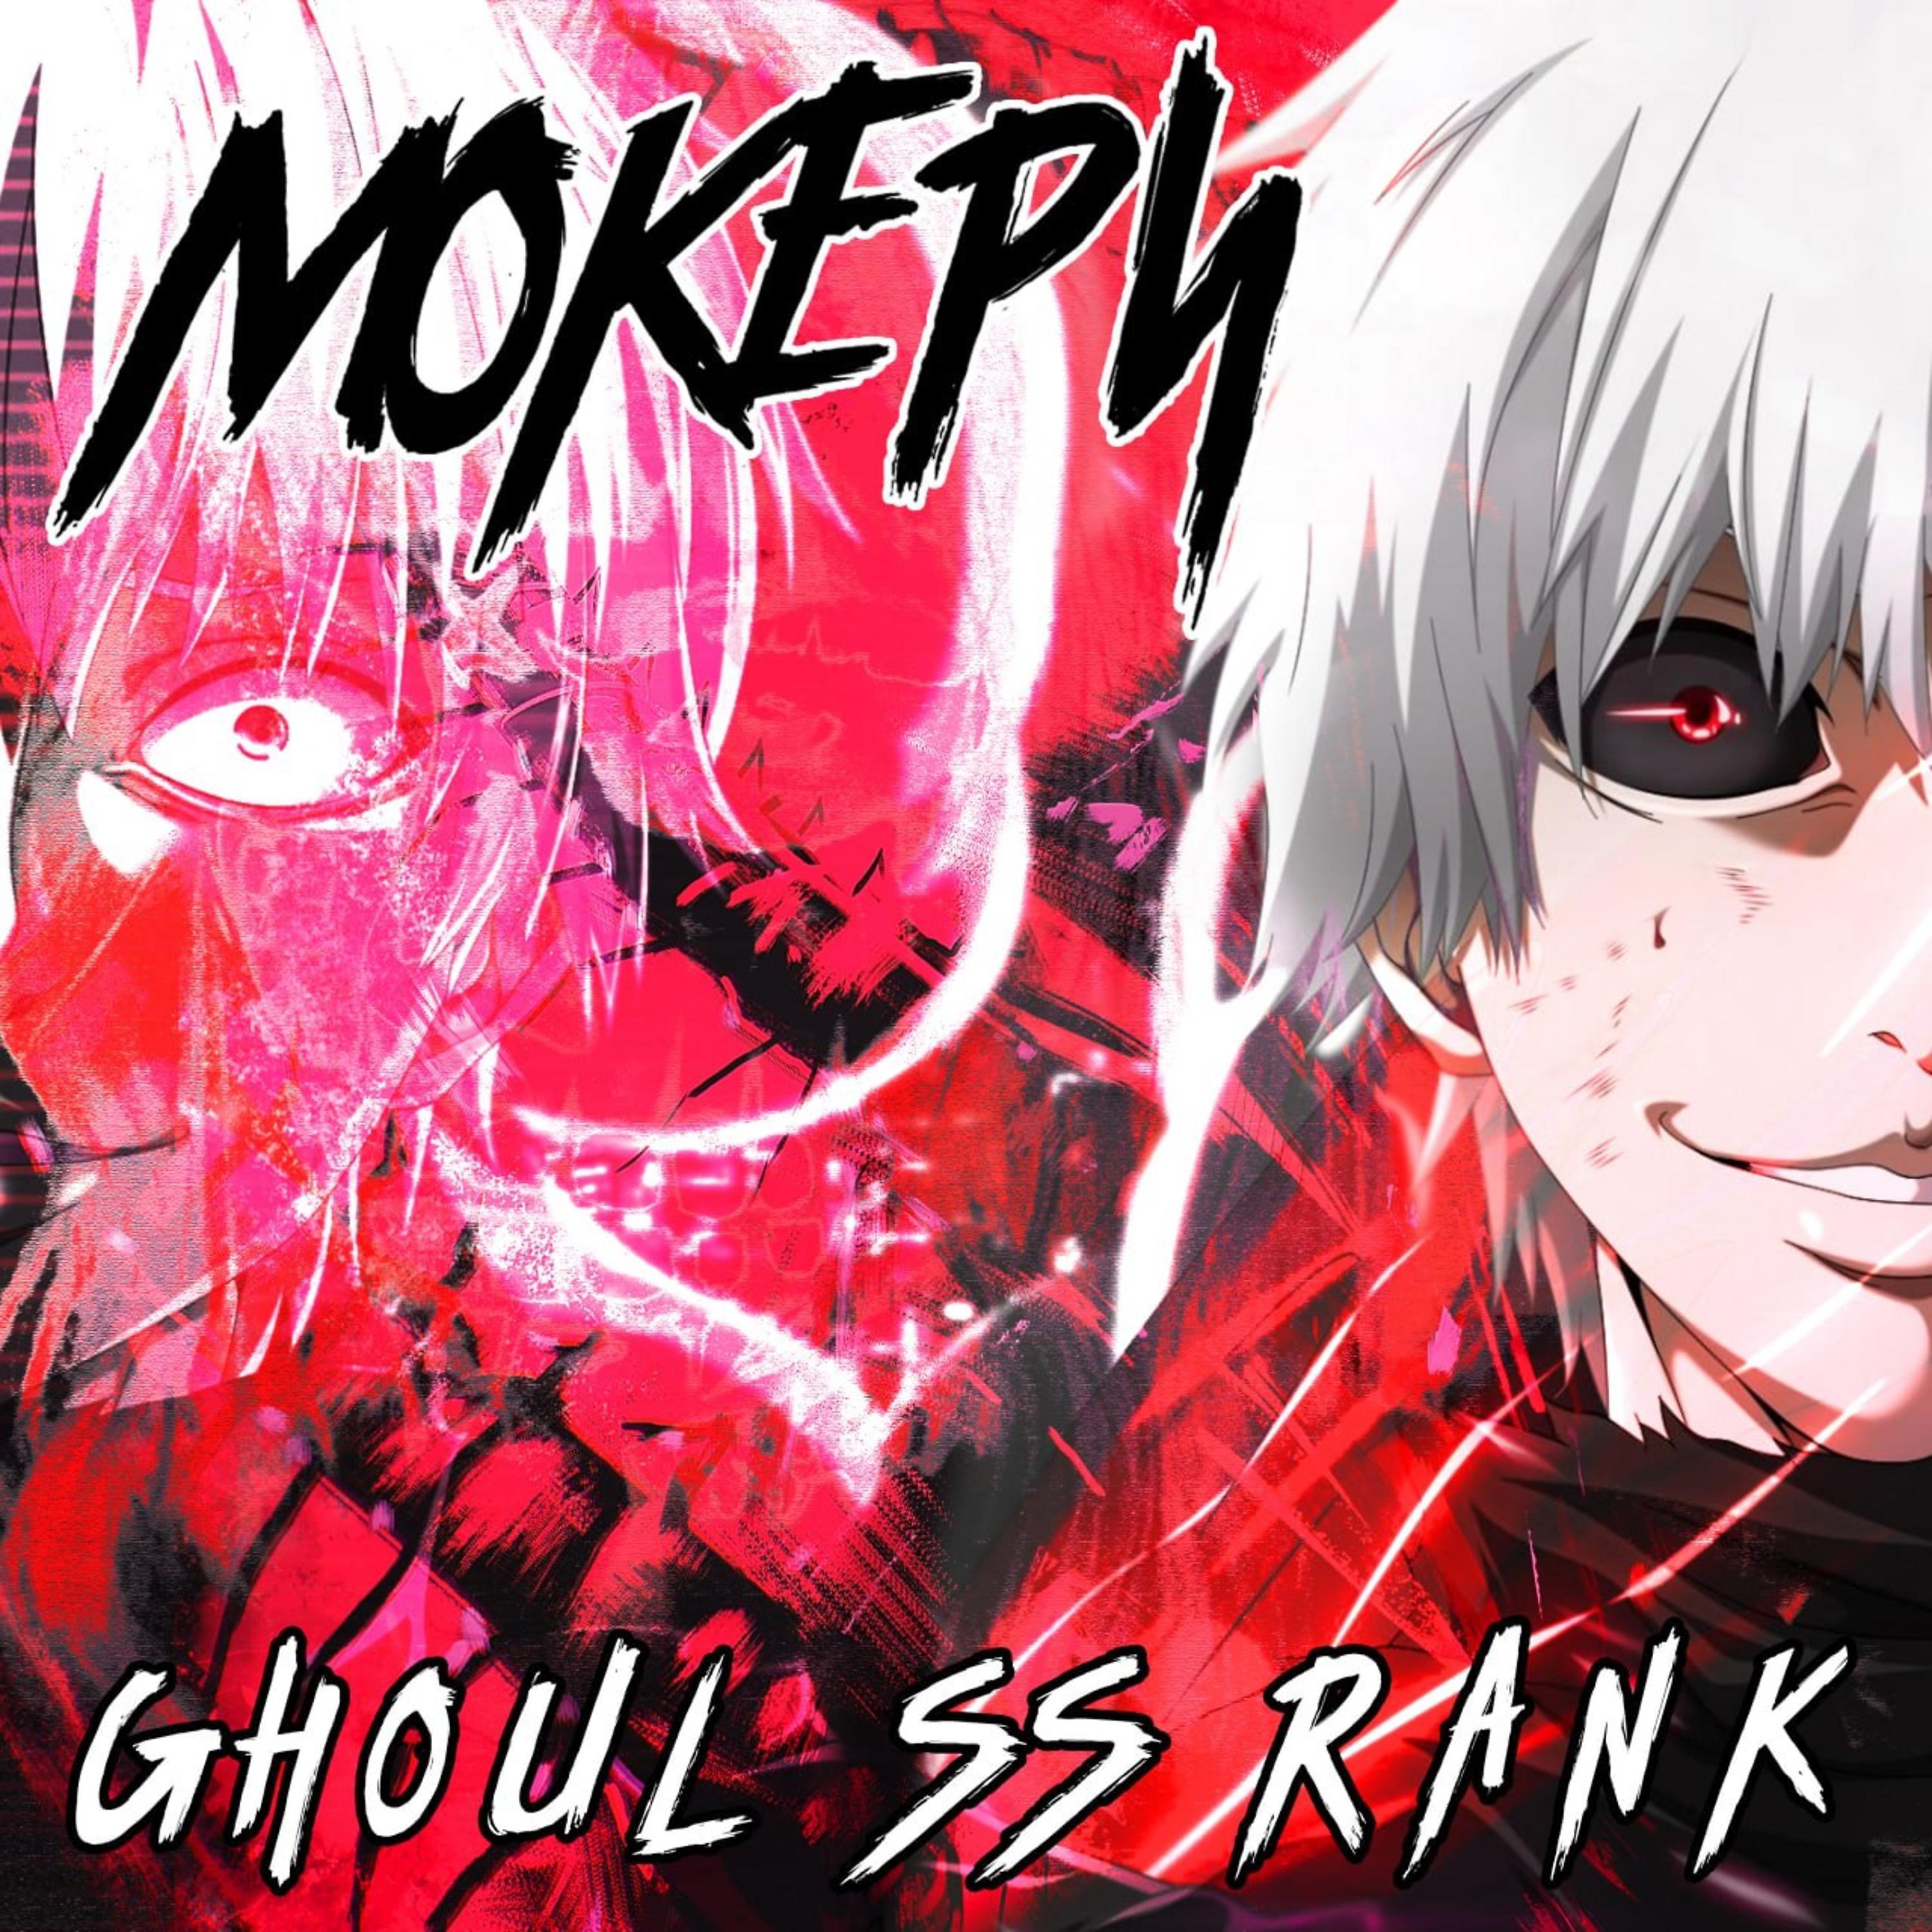 Ghoul ranks